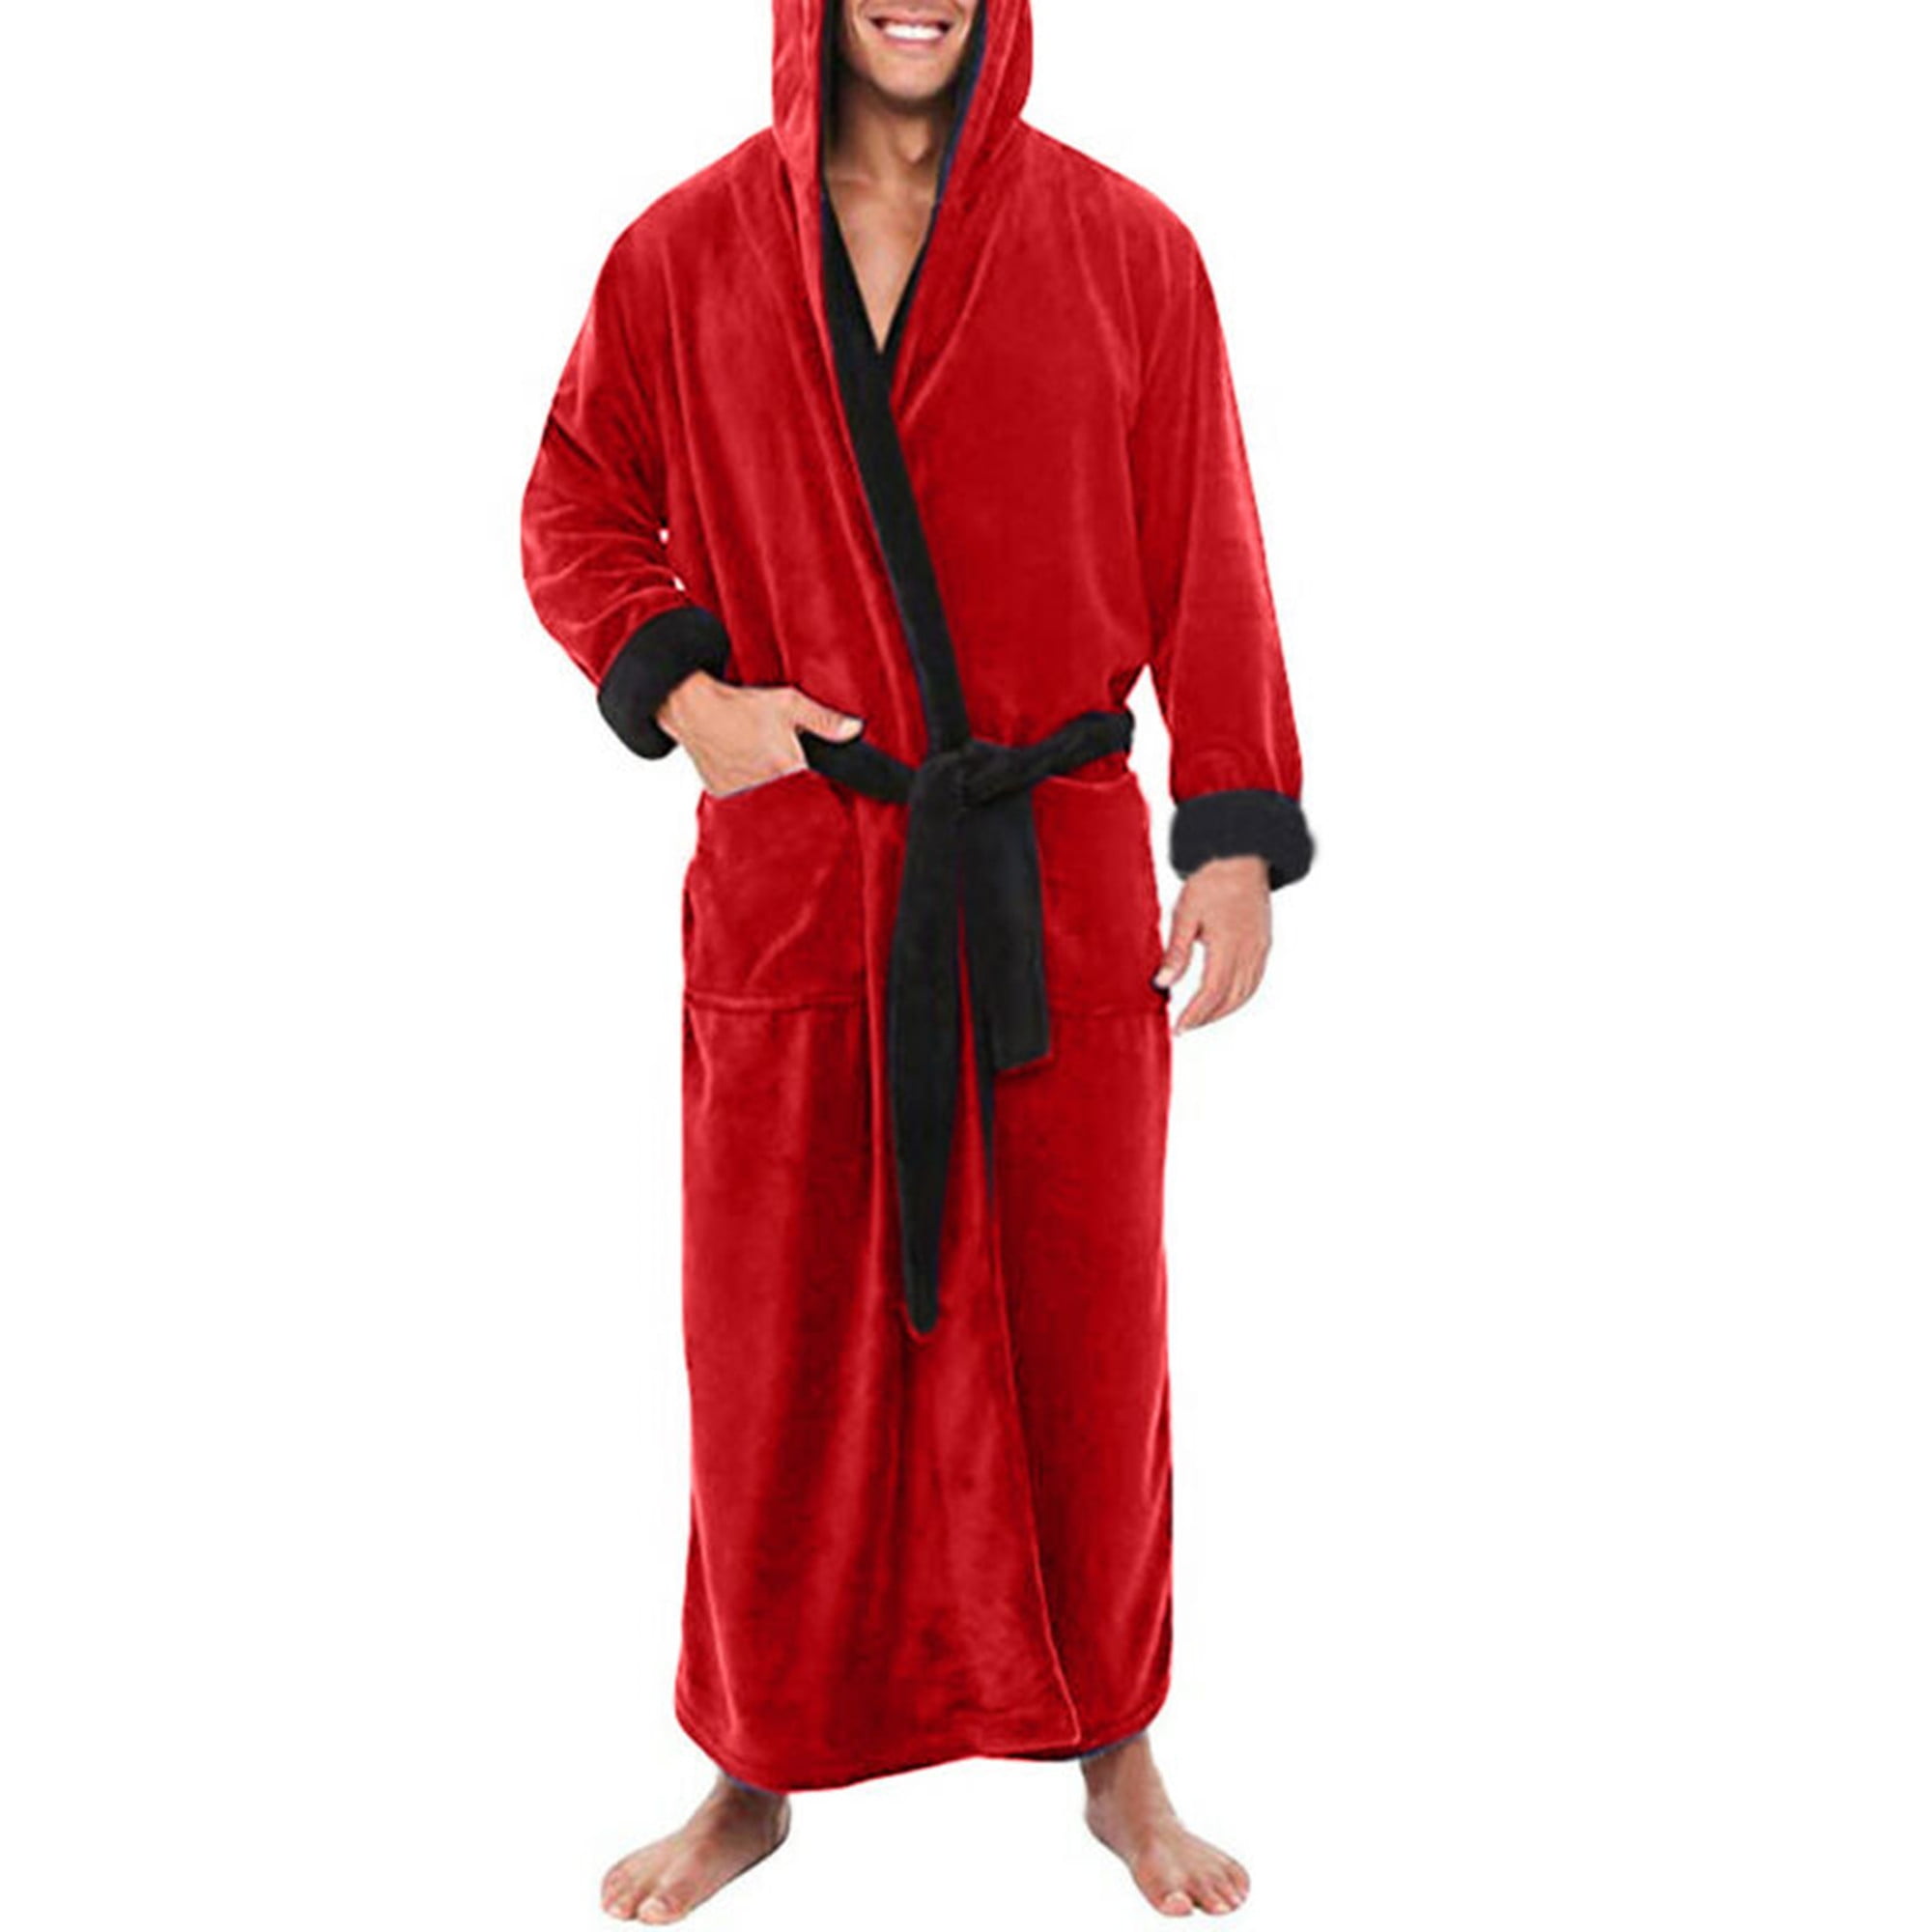 Details about   Boys Contrast Dressing Gown Soft Plush Bath Robe Kids Nightwear Xmas Gift Size 